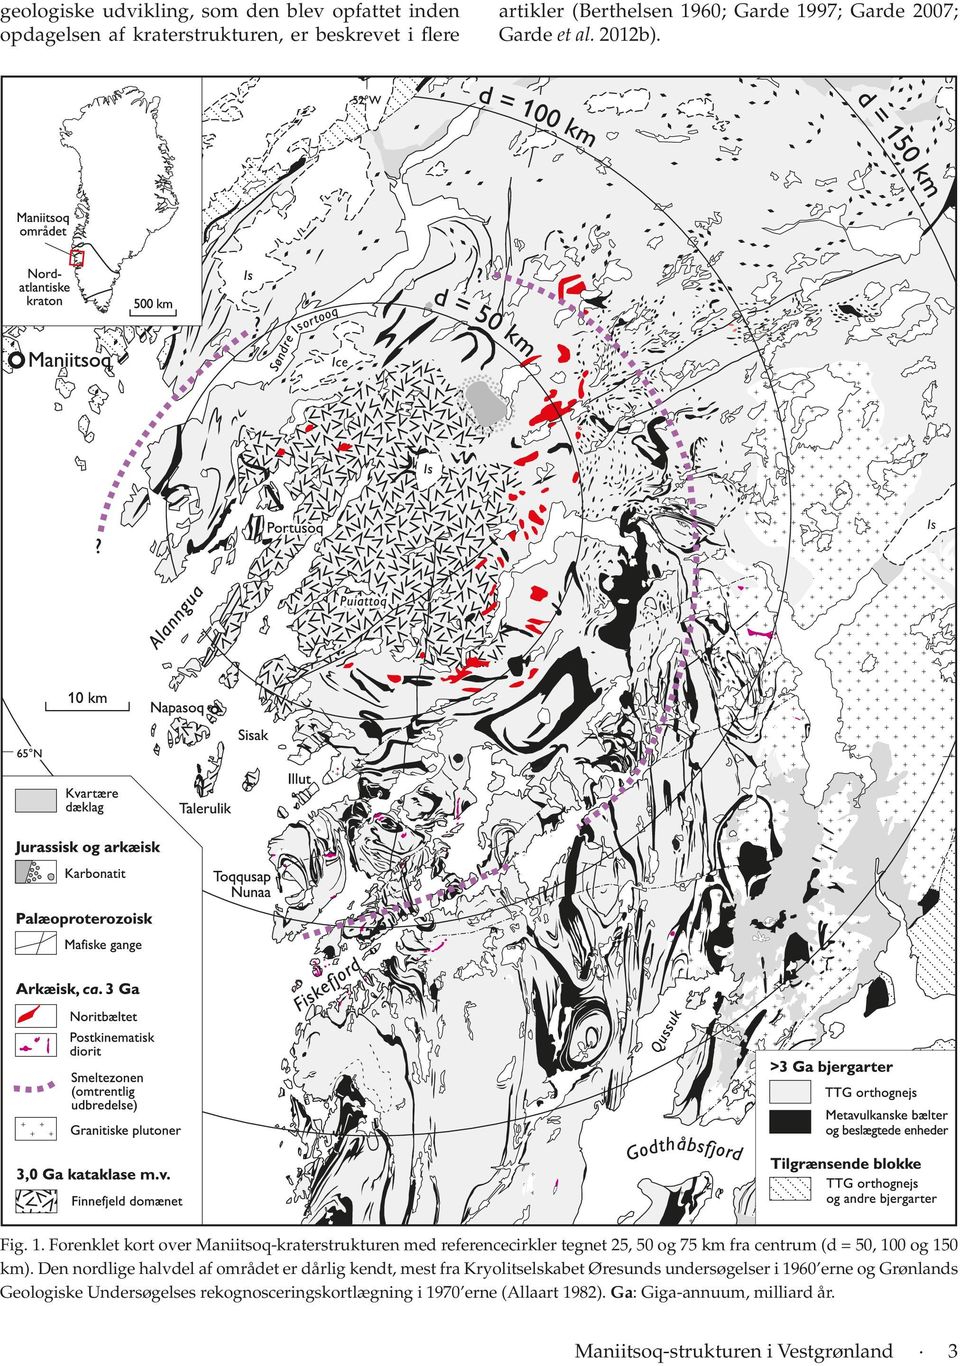 Forenklet kort over Maniitsoq-kraterstrukturen med referencecirkler tegnet 25, 50 og 75 km fra centrum (d = 50, 100 og 150 km).